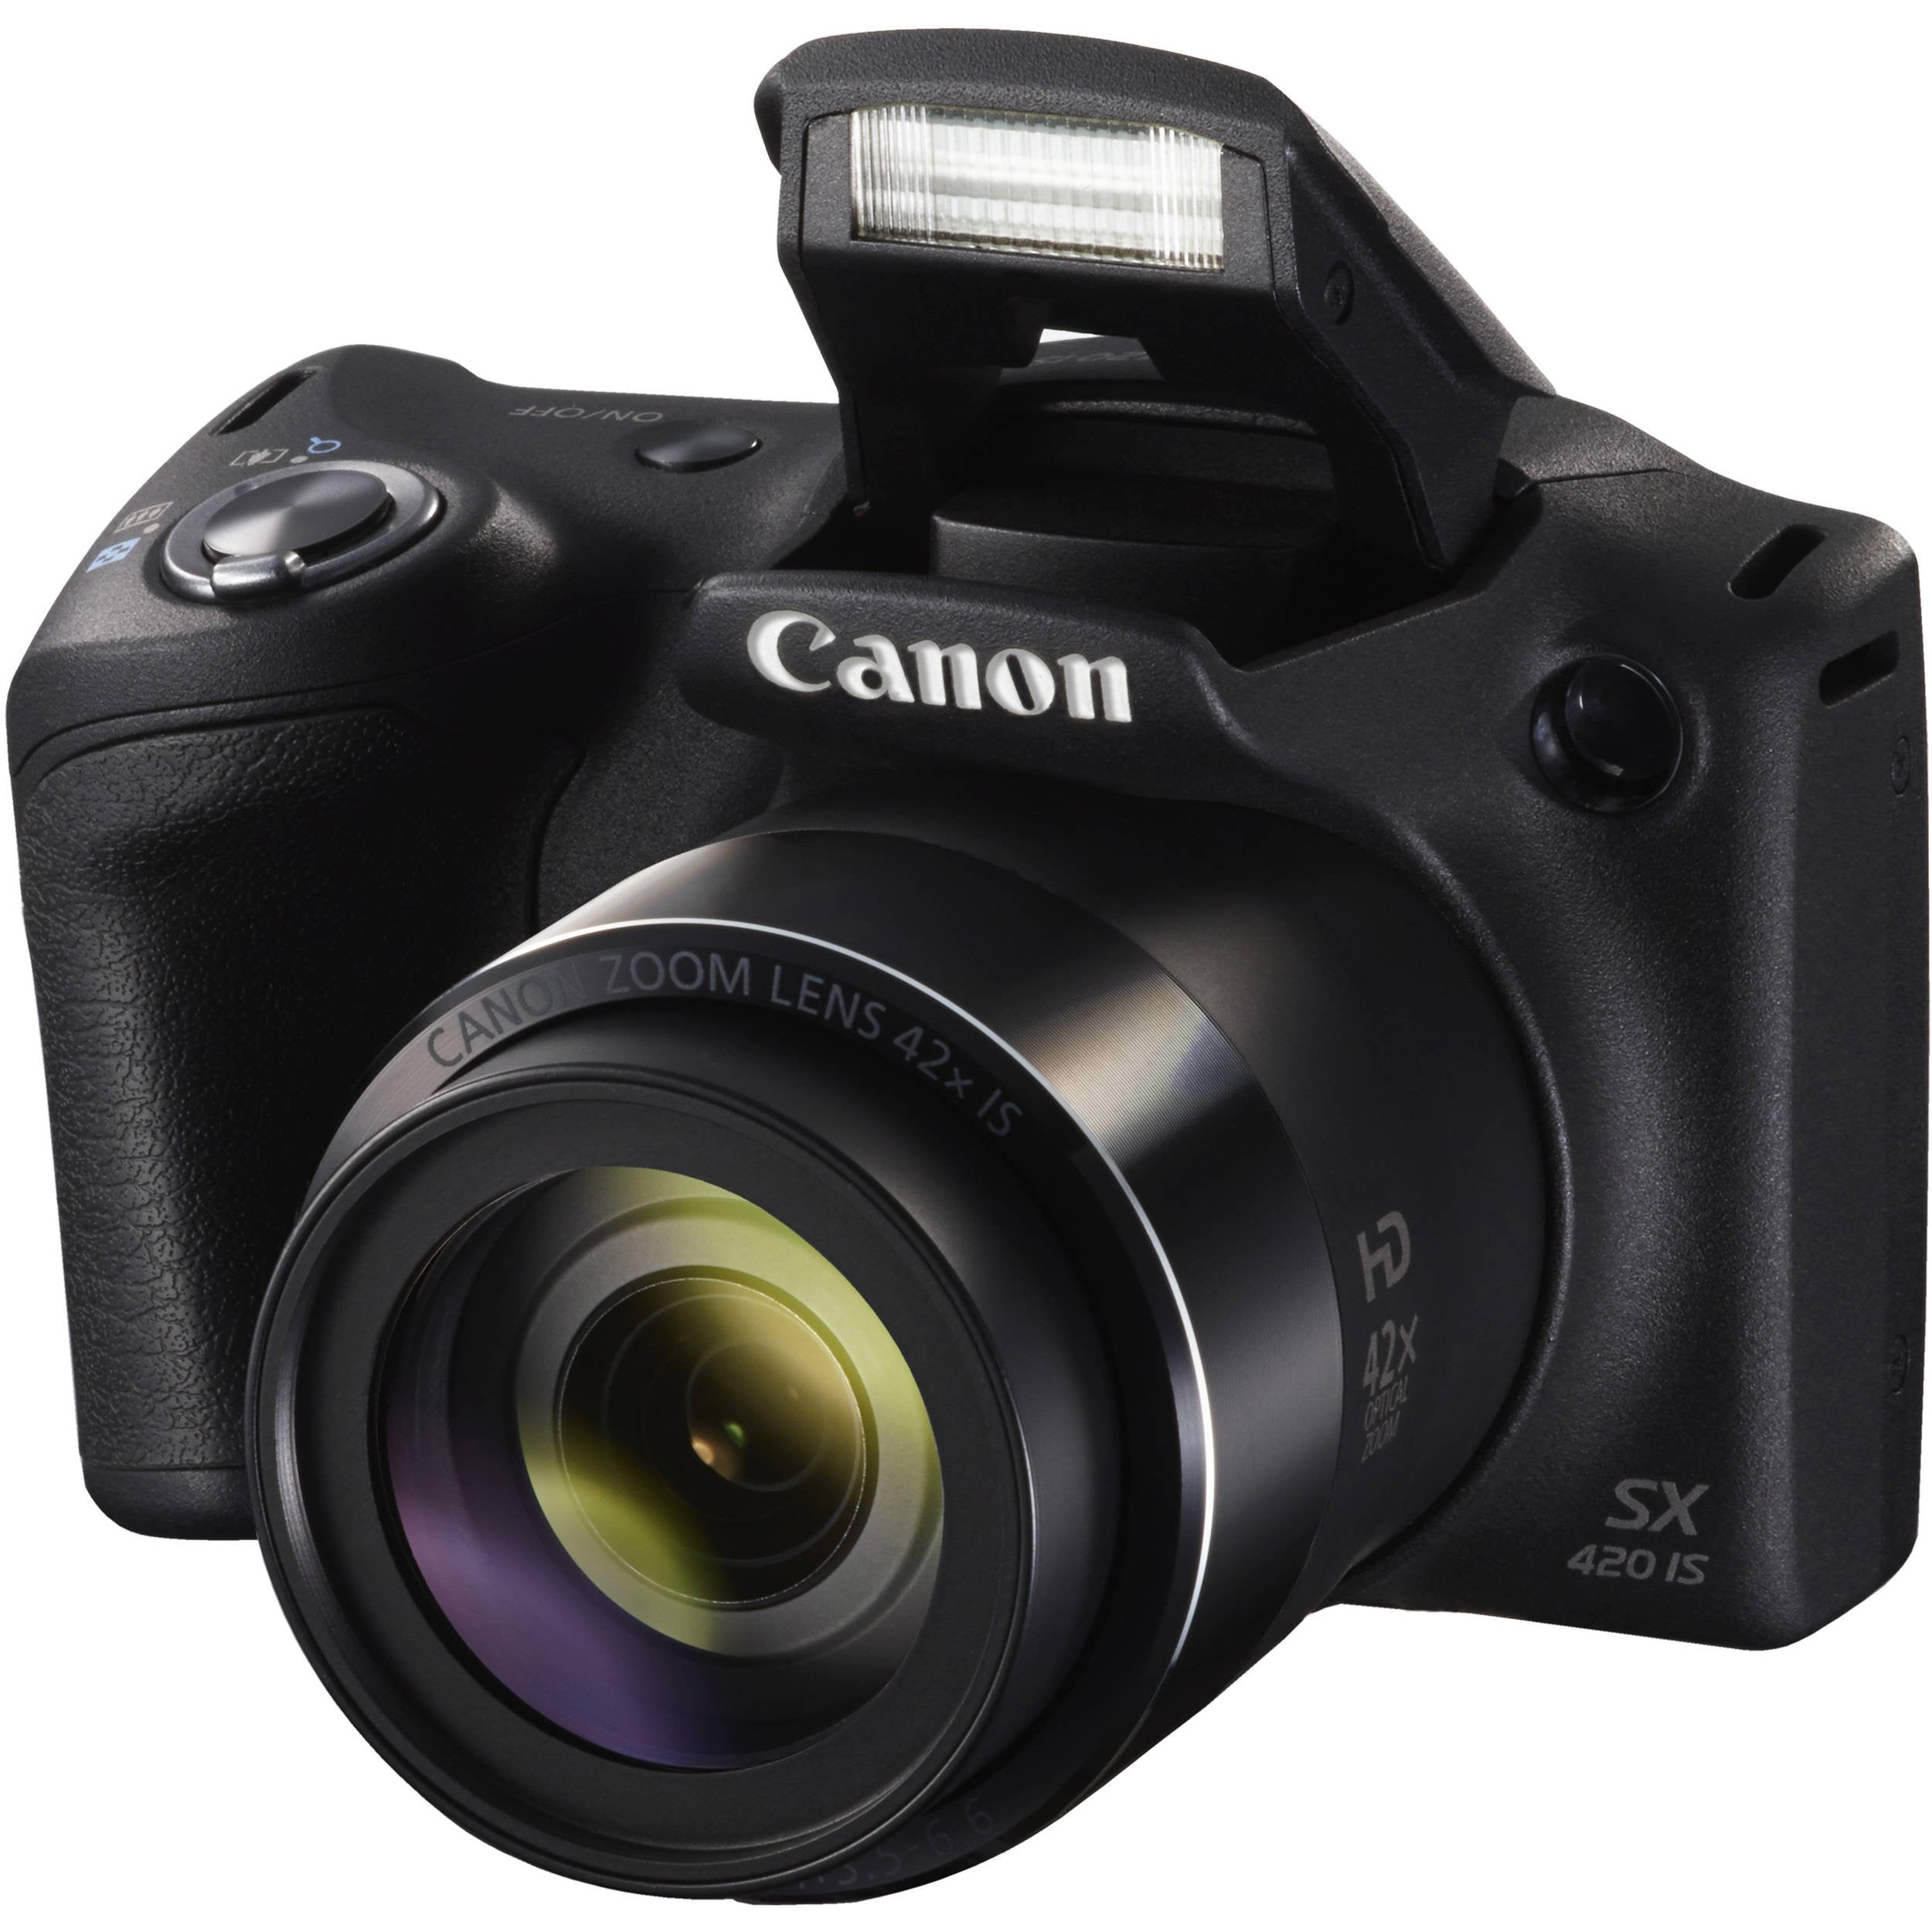 Canon PowerShot SX420 is Digital Camera (Black) 1068C001 International Model + NB-11L Lithium Ion Battery + 16GB Memory Card Starter Bundle